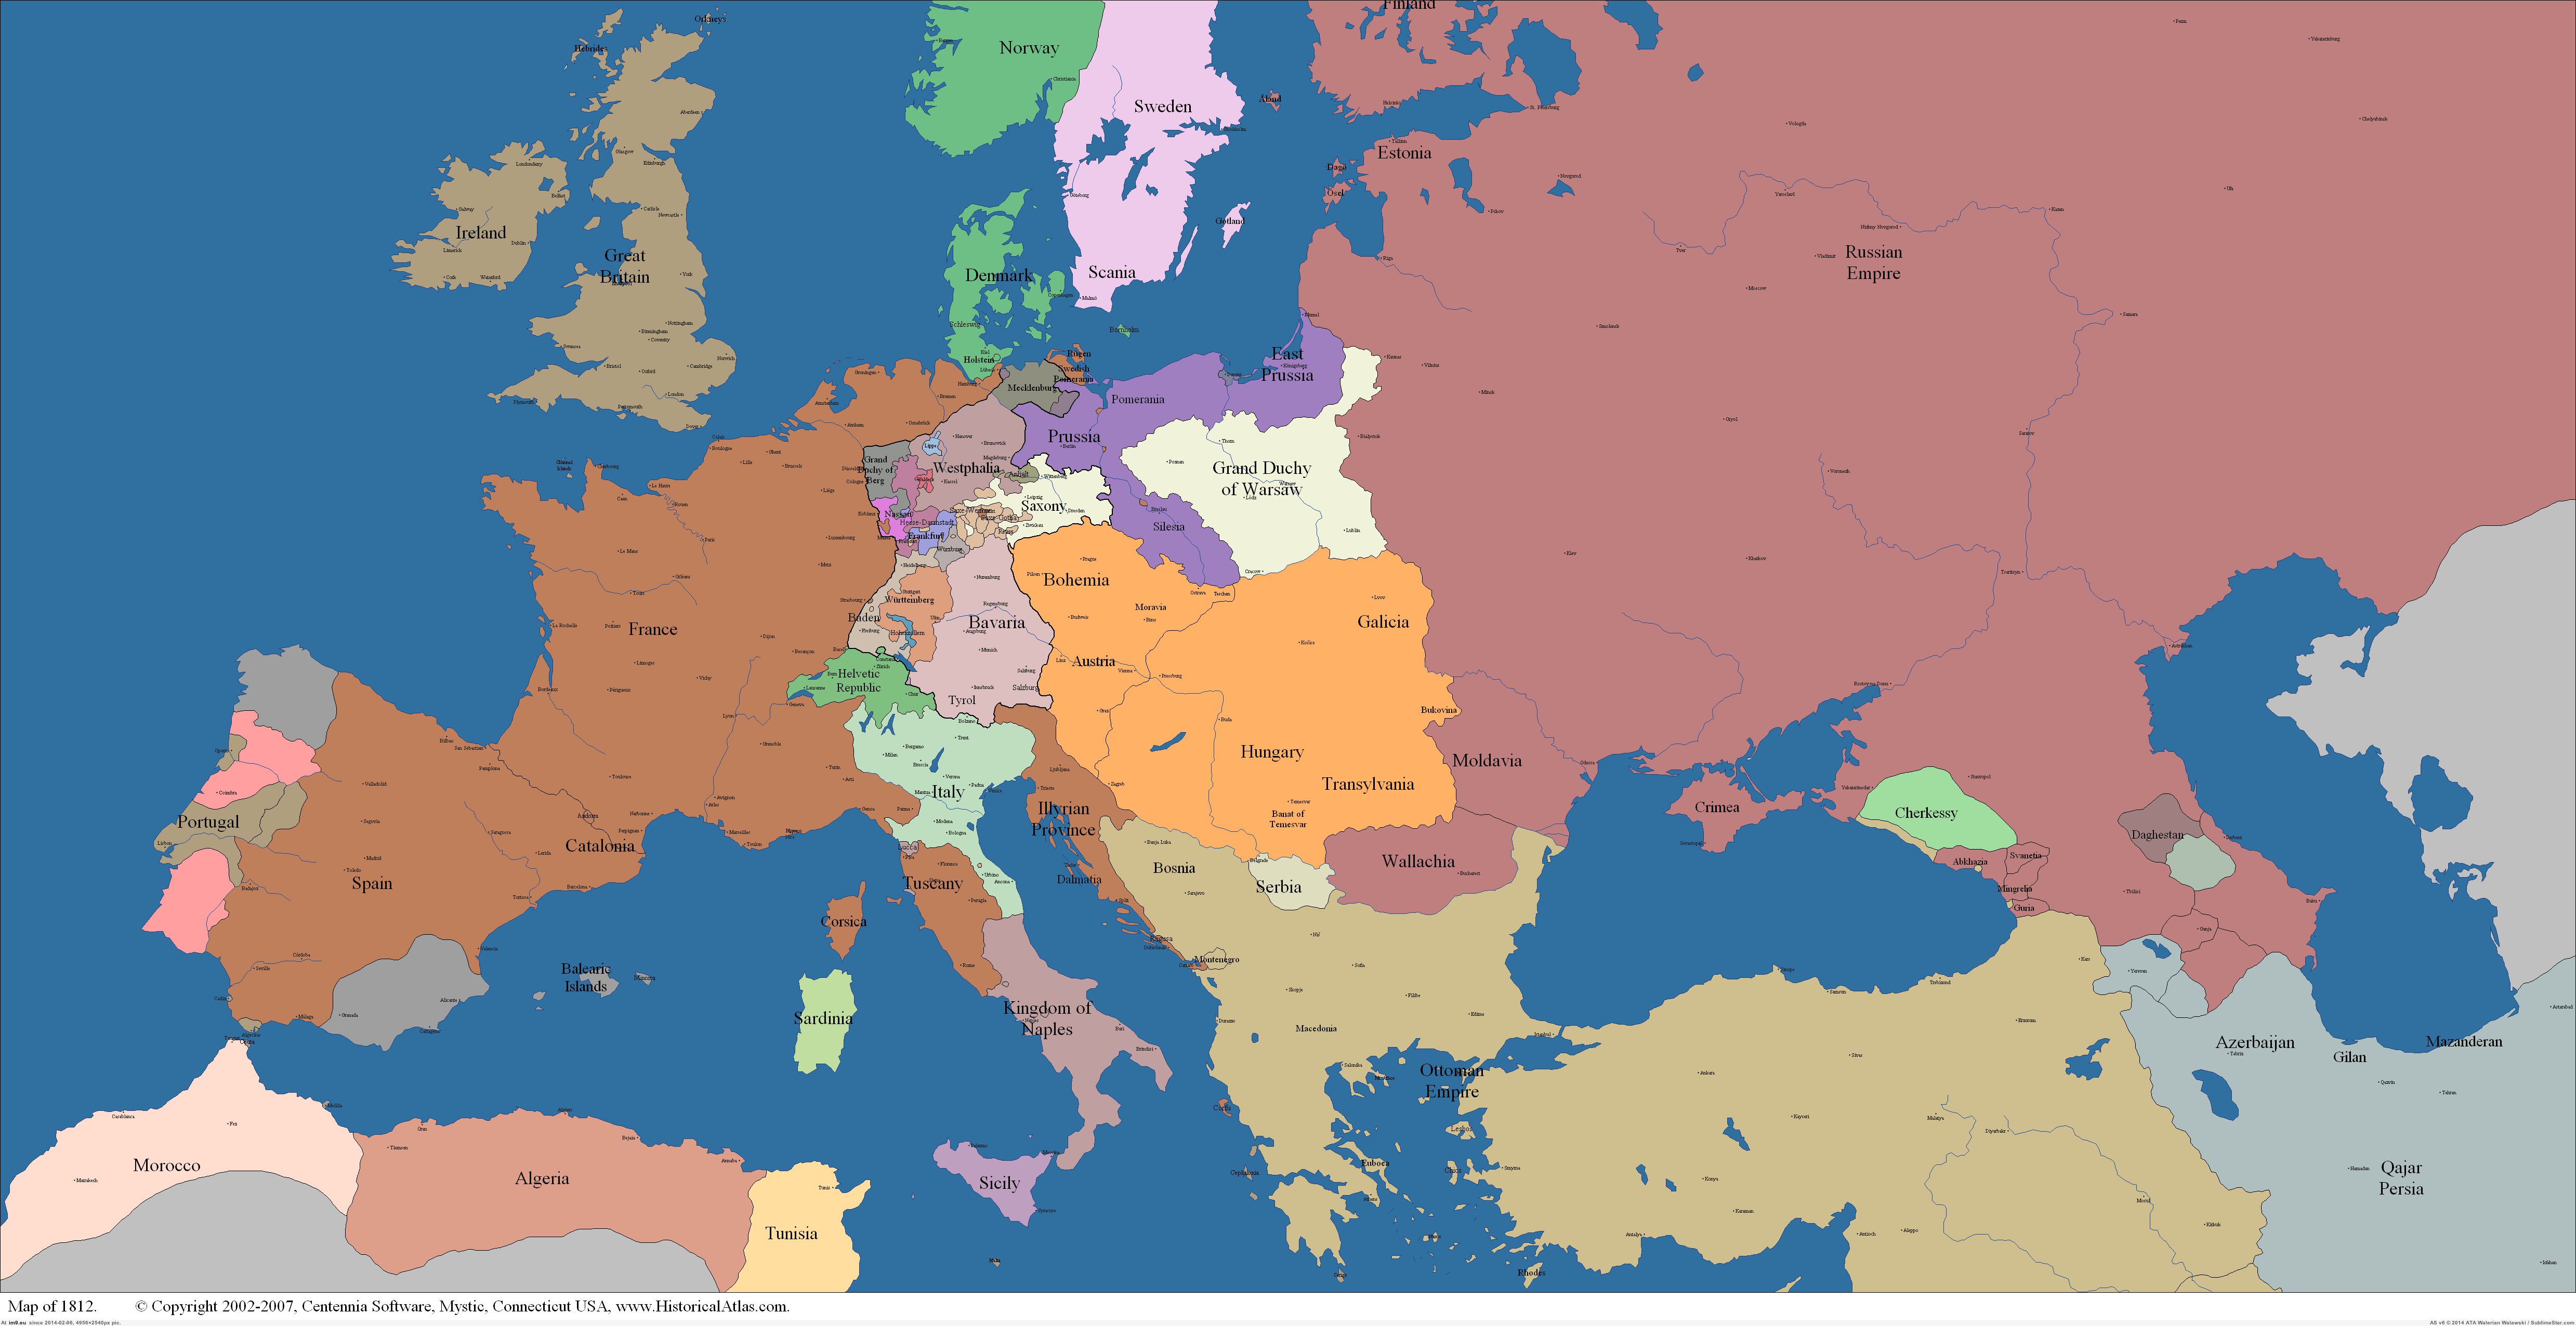 European Invasion Porn - Pic. #Europe #Russia #Napoleon #4956x2540 #Eve #Invasion, 901691B â€“ My  r/MAPS favs